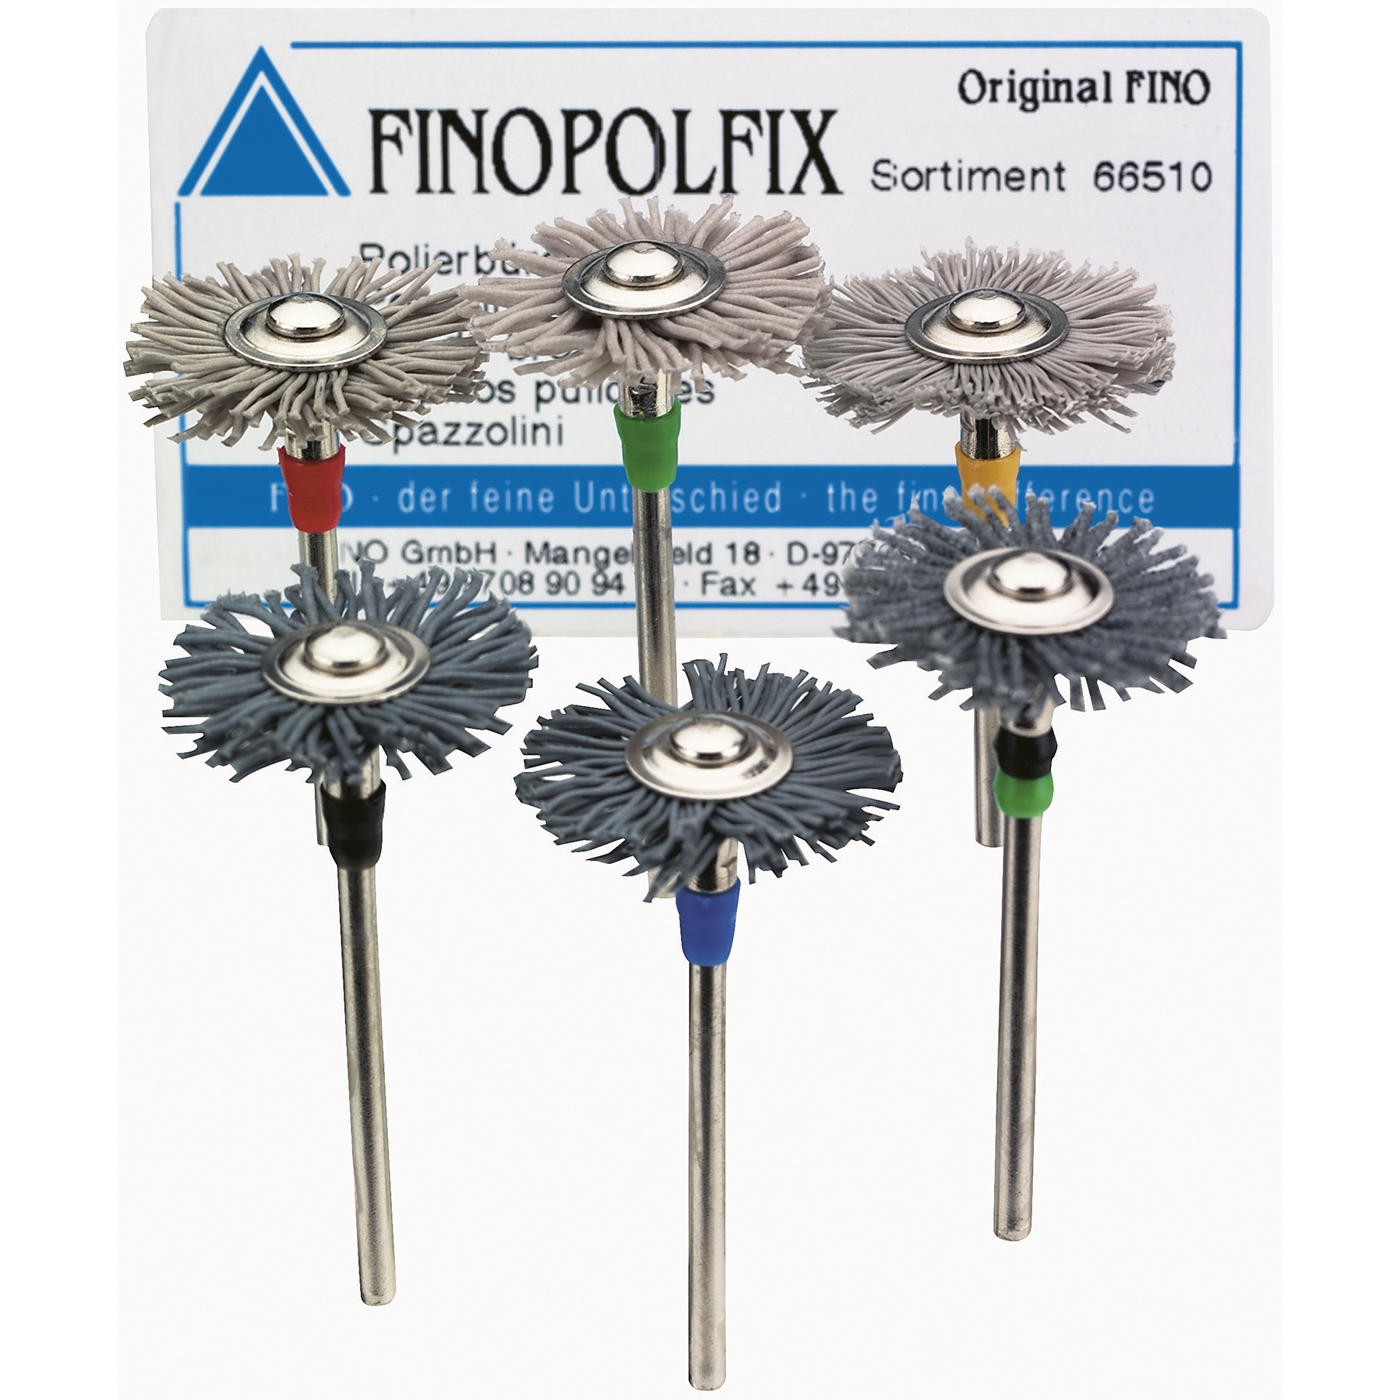 FINOPOLFIX Polishing Brushes - 1 assortment